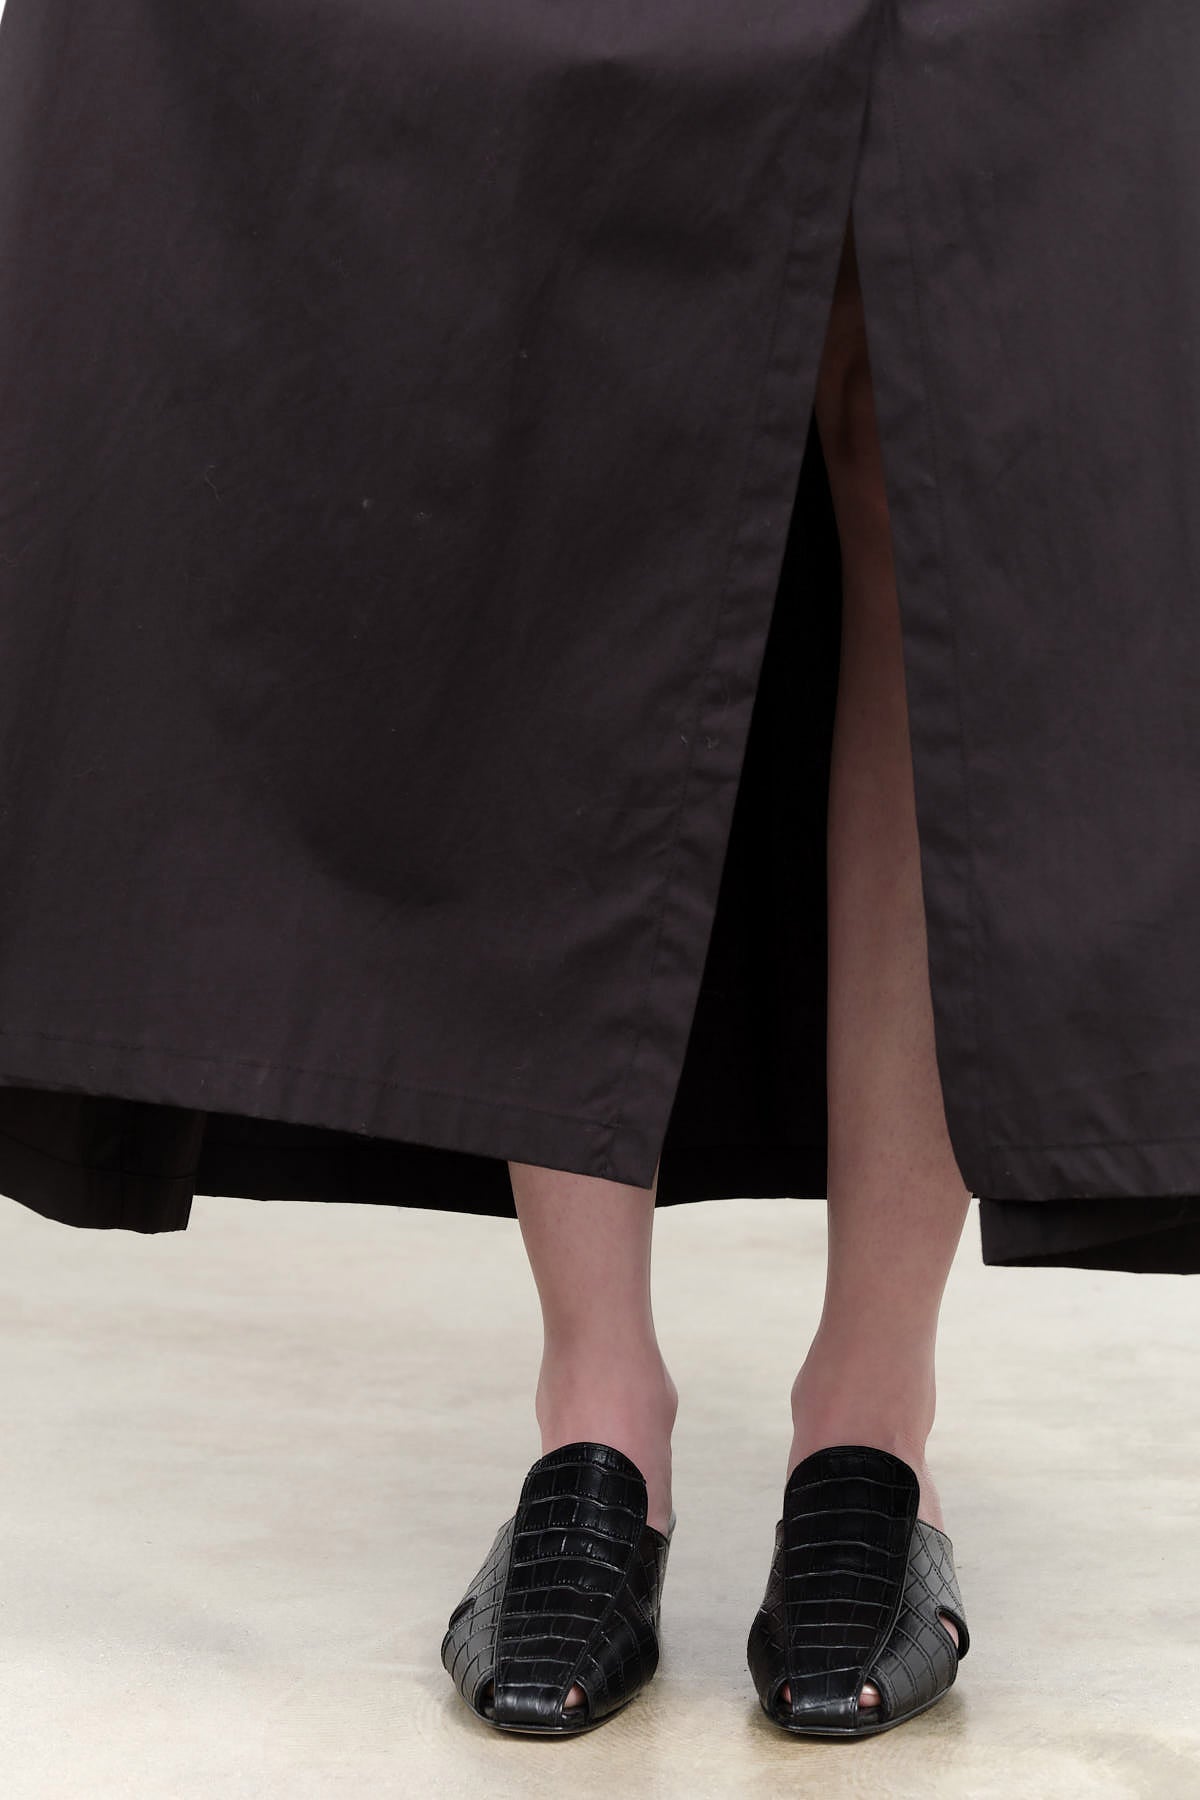 Black Dress with Slit by Christian Wijnants